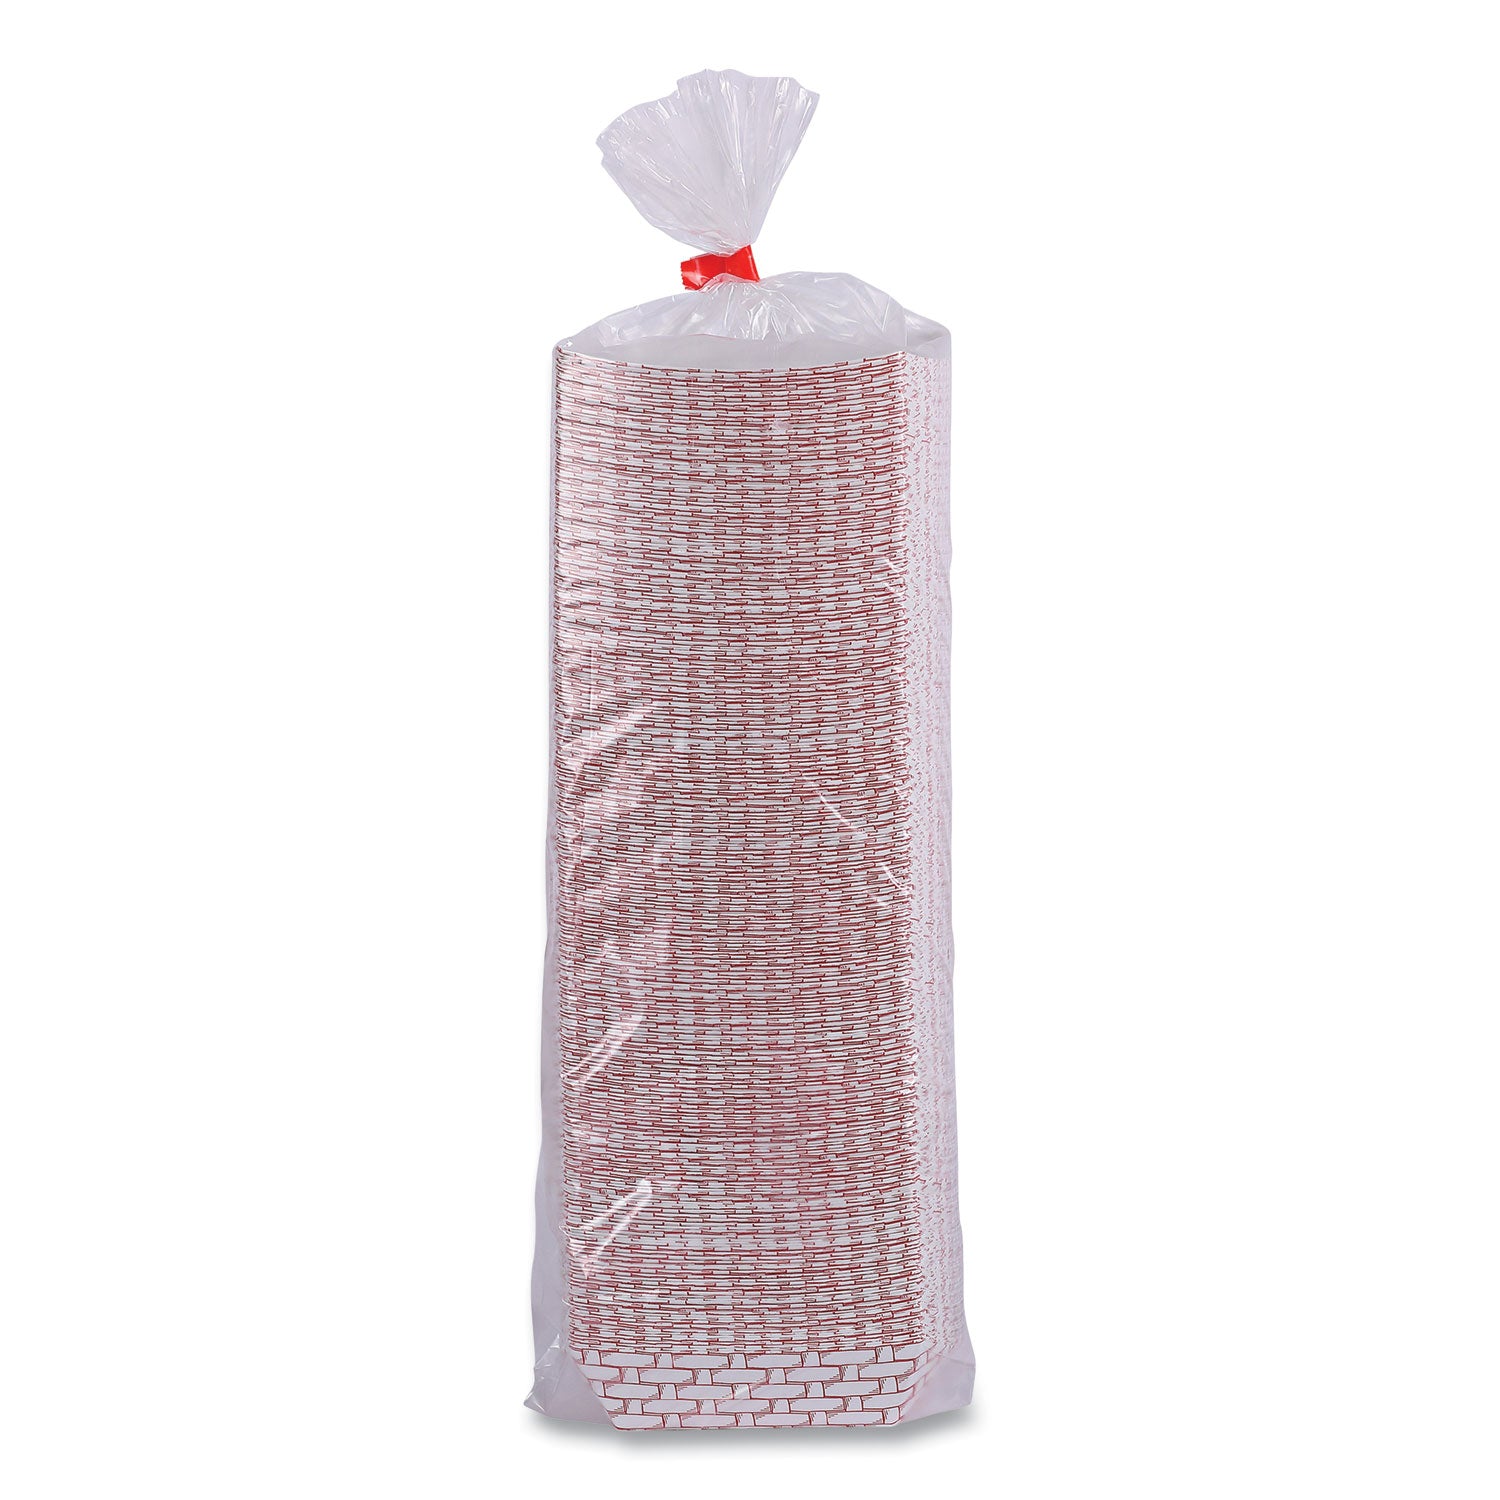 Paper Food Baskets, 6 oz Capacity, 3.78 x 4.3 x 1.08, Red/White, 1,000/Carton - 